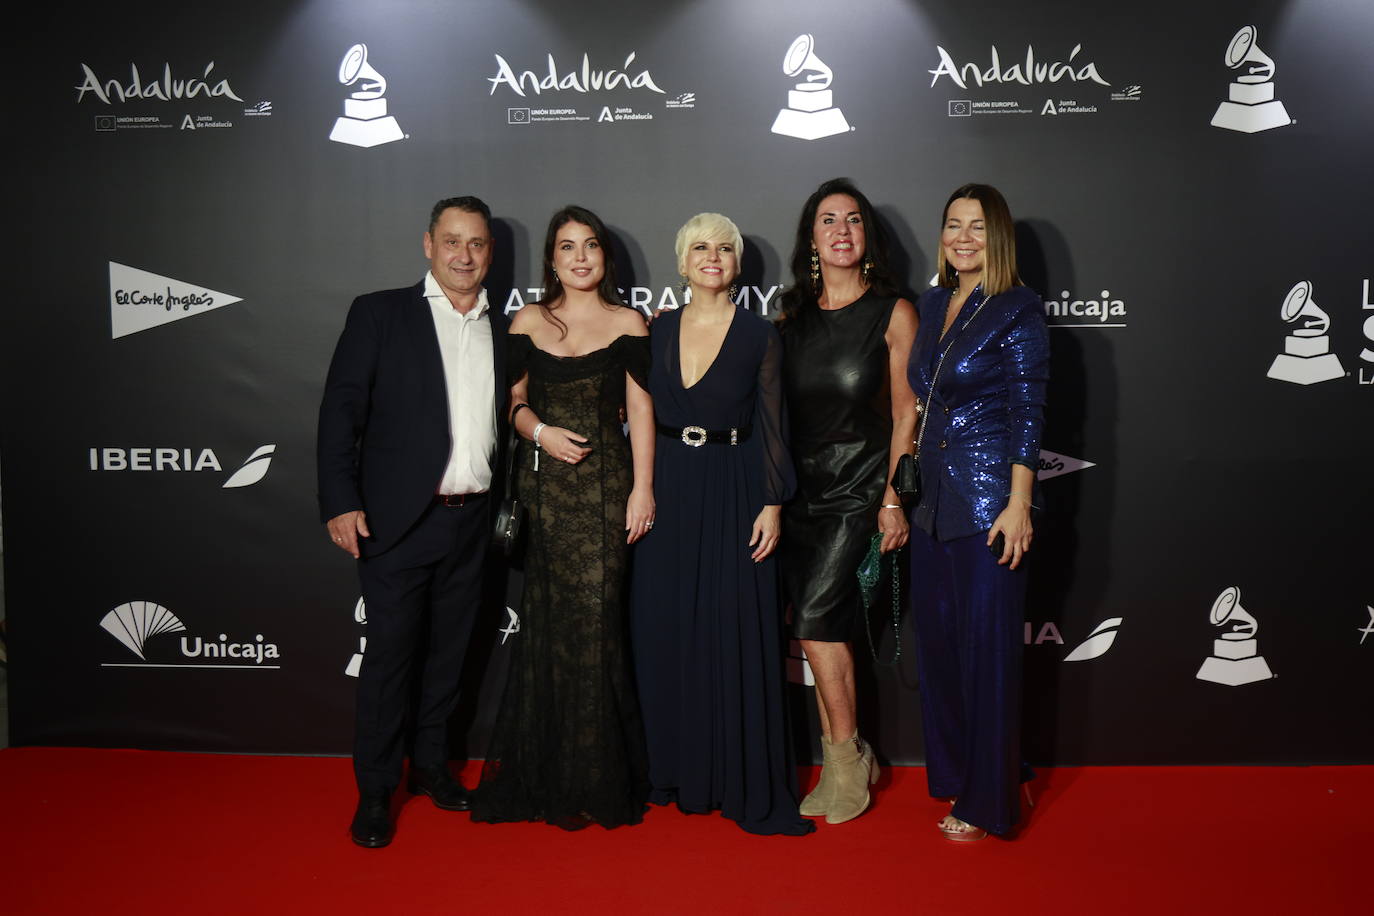 Malaga hosts the concert 'Latin Grammy Session: urban music